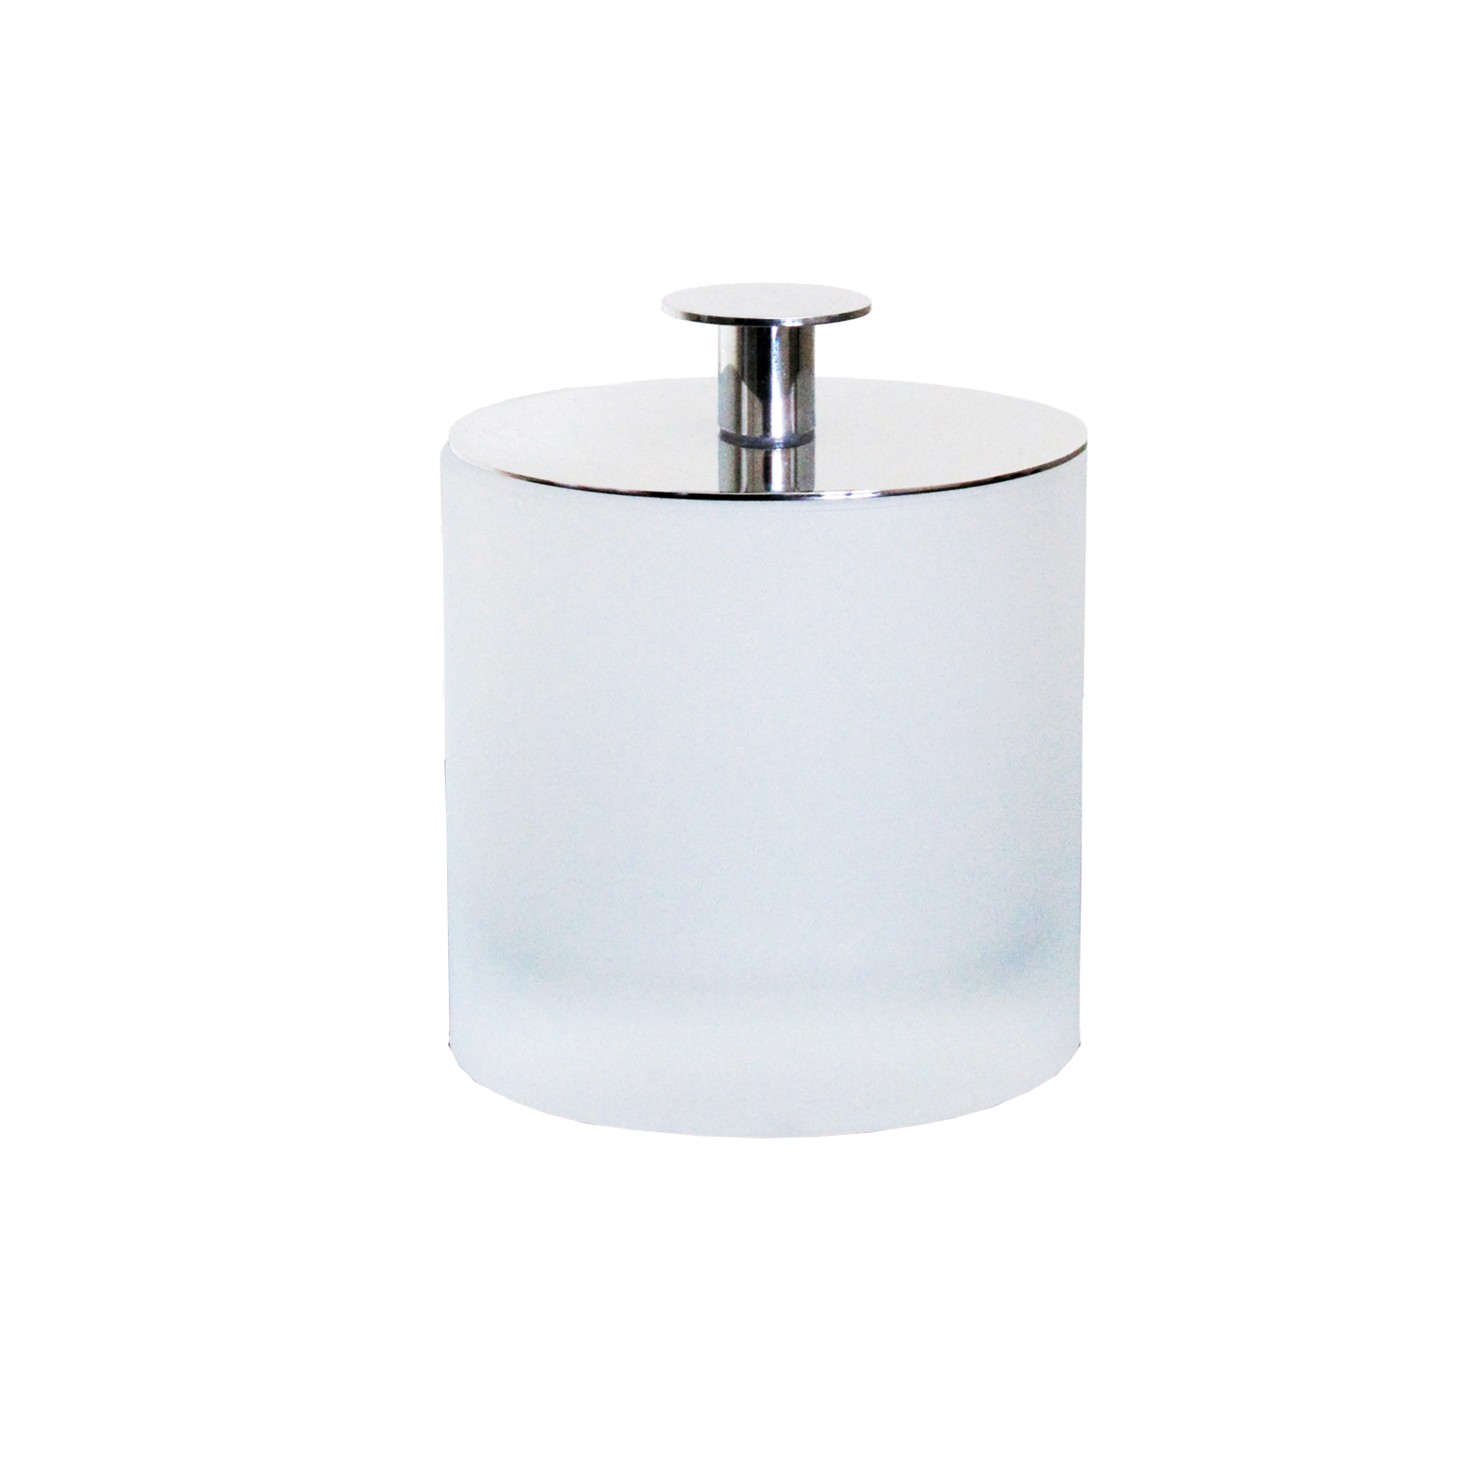 Bath pad container - satin glass accessories